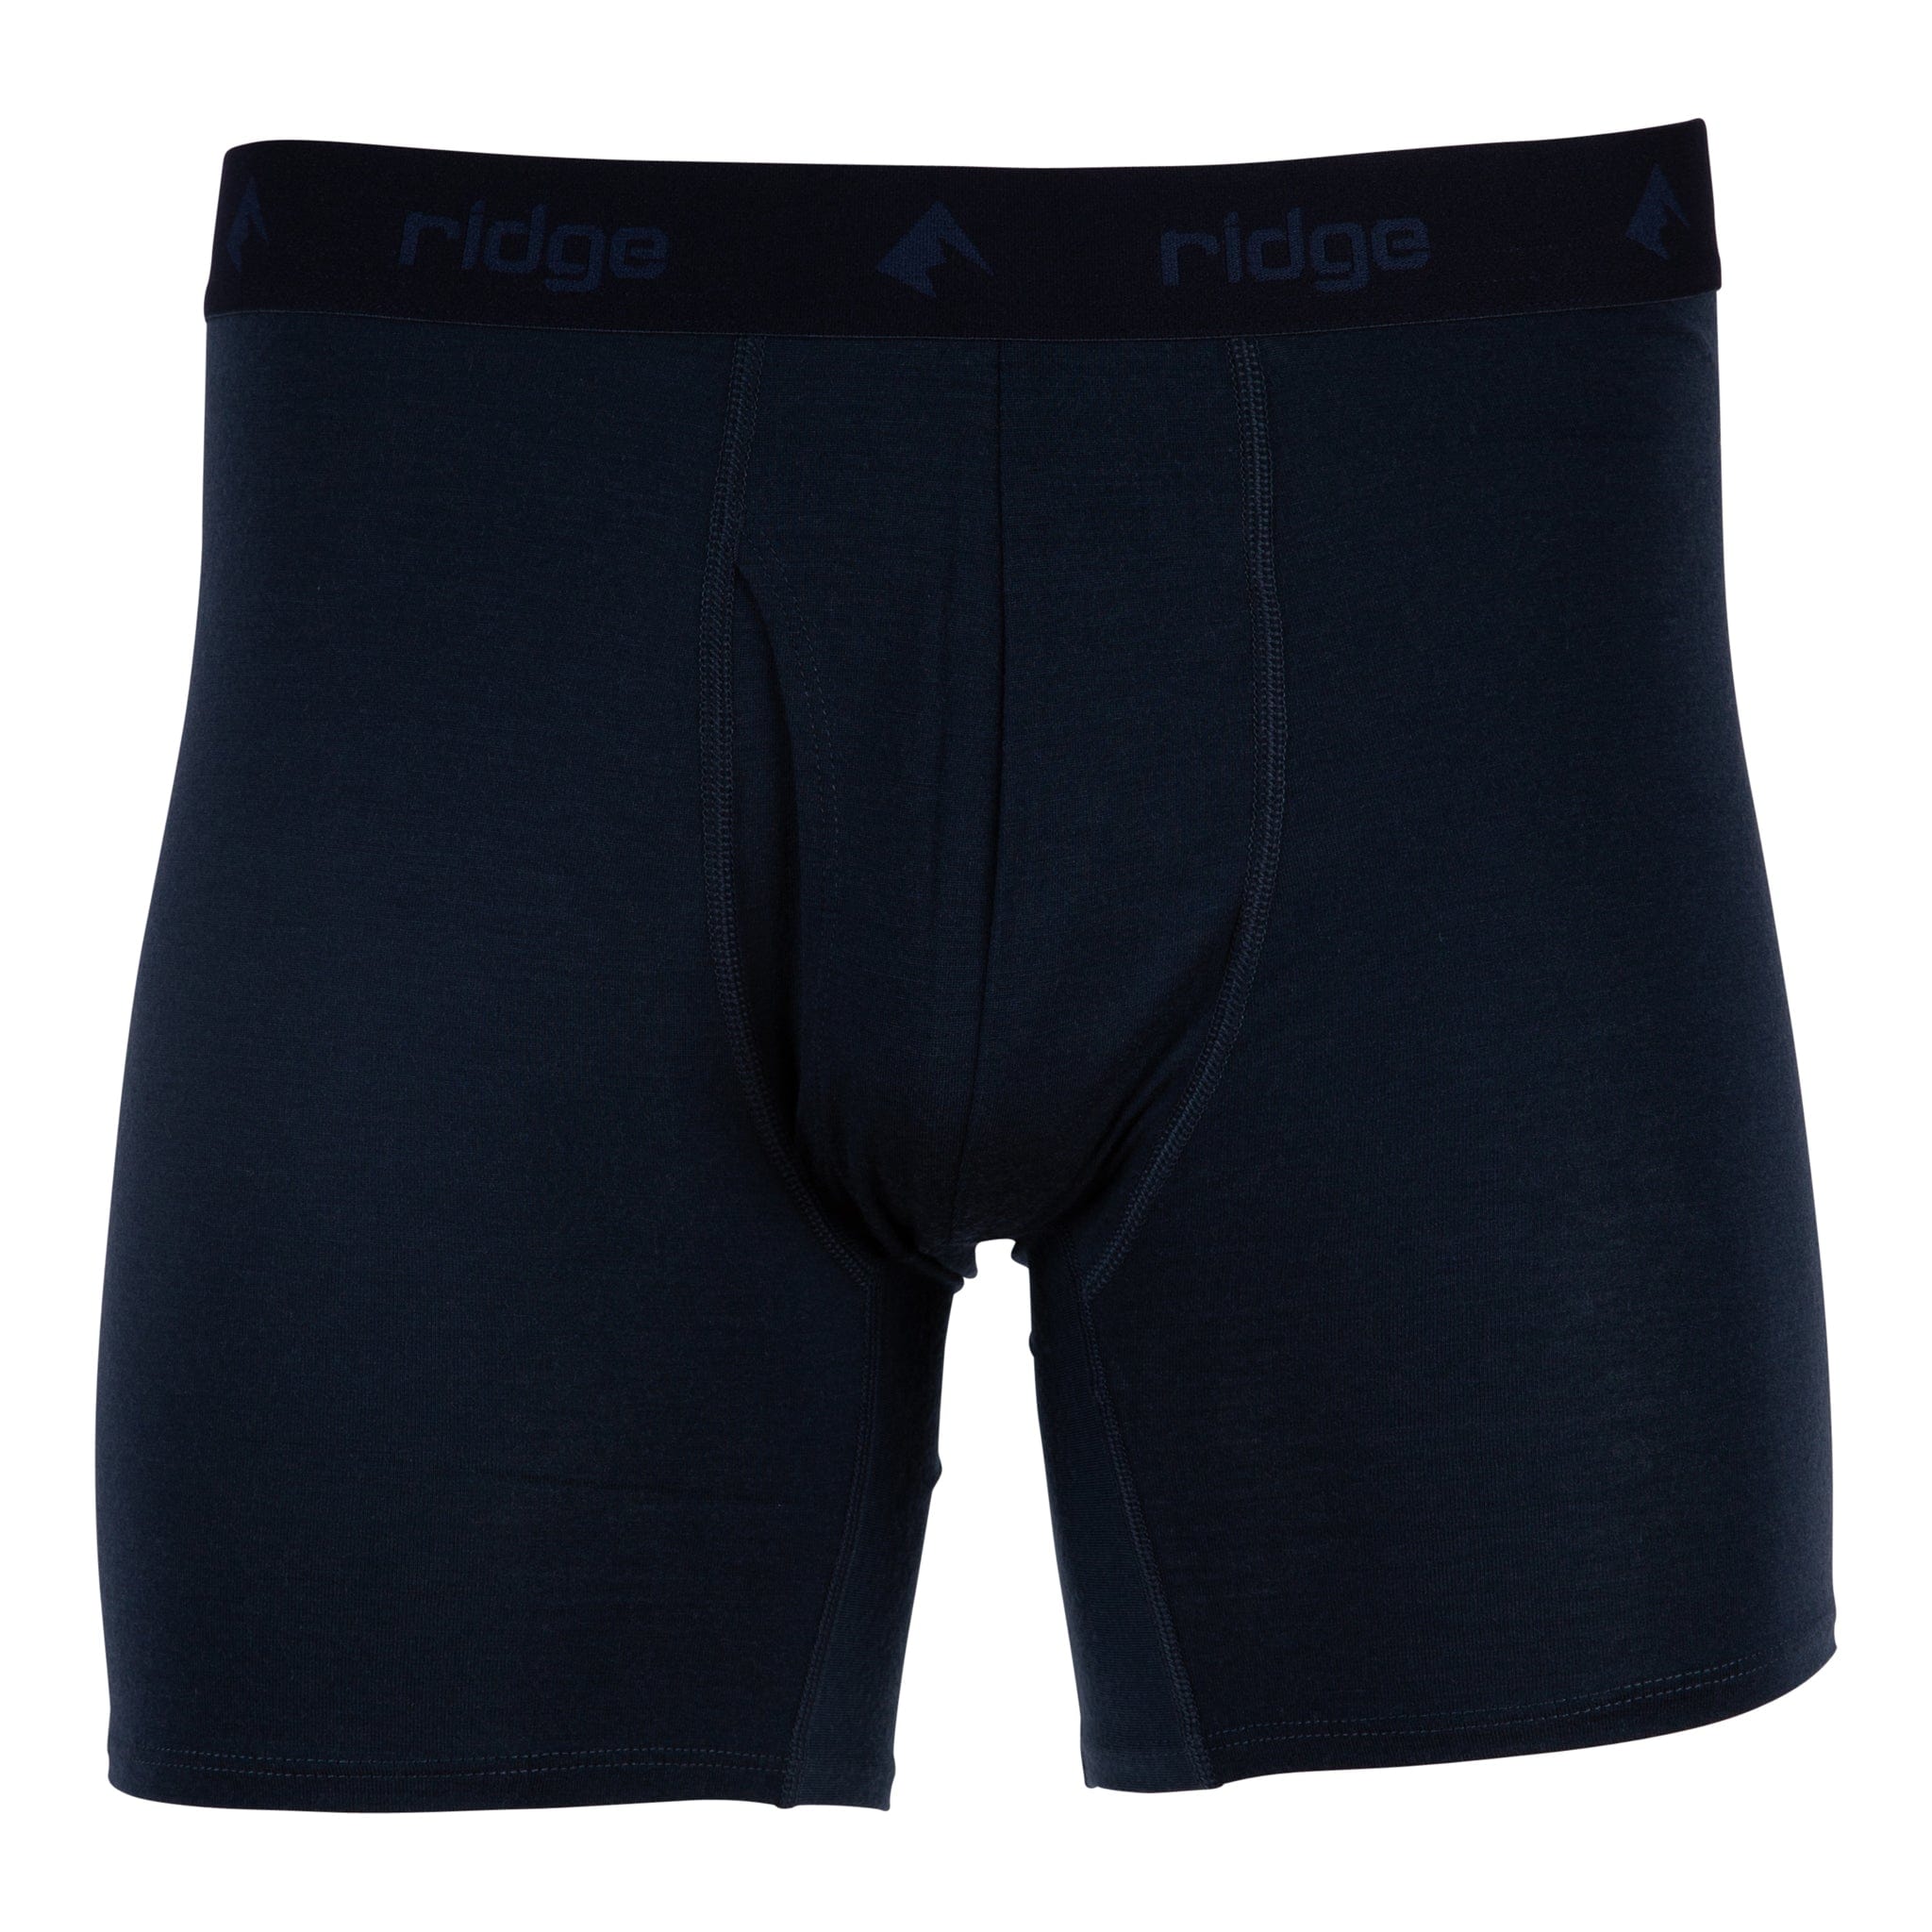 Merino Boxer Shorts - Hunting Apparel